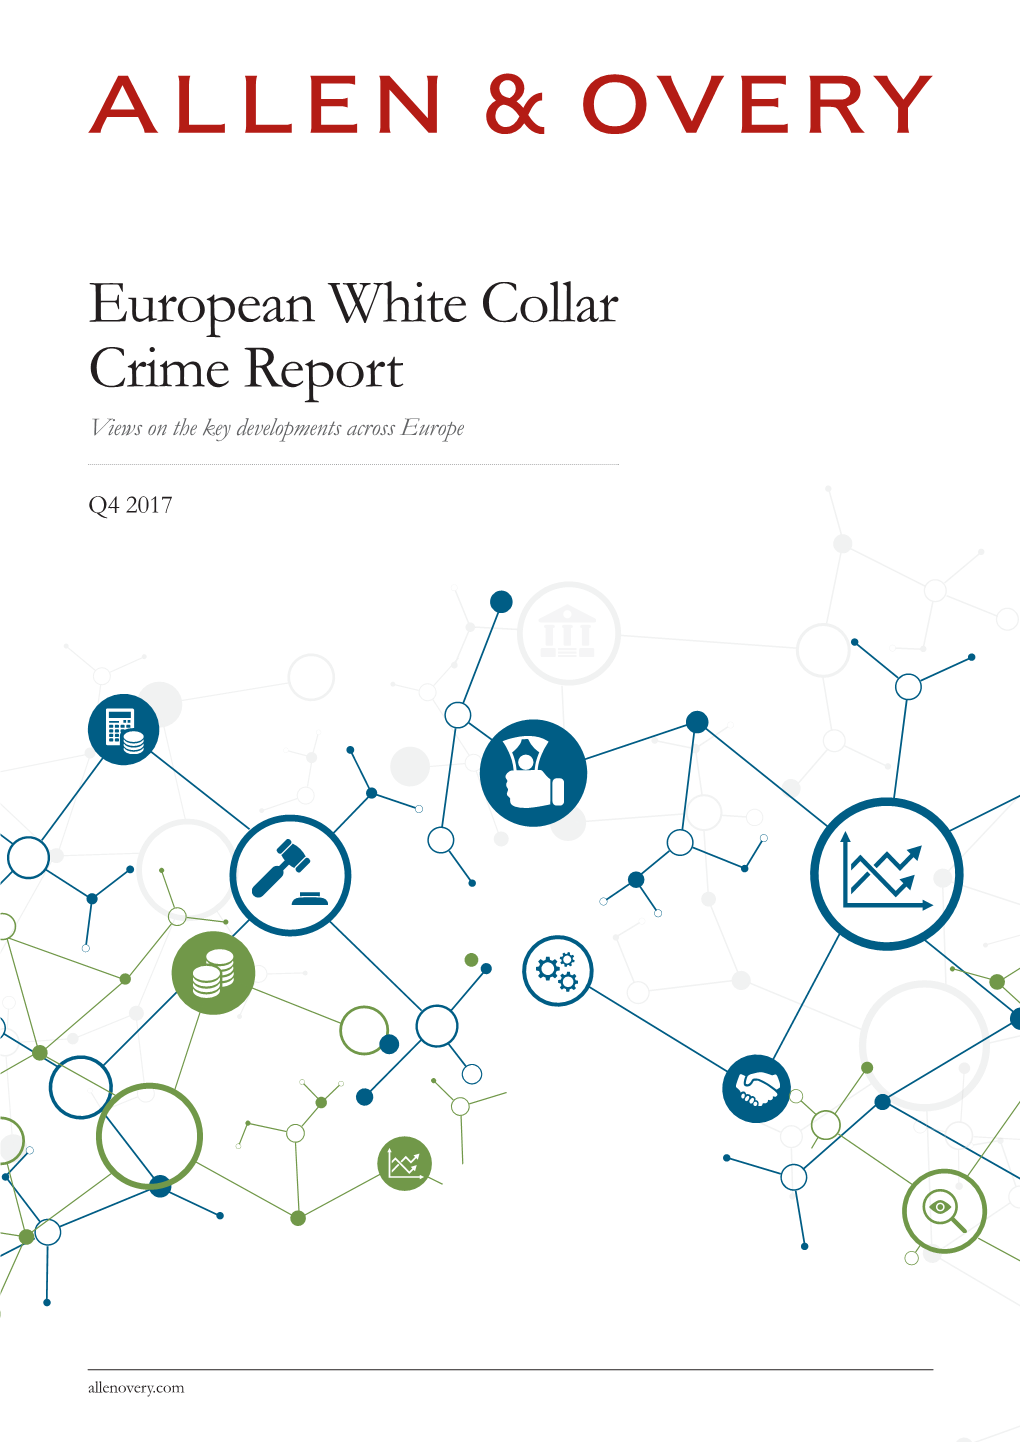 European White Collar Crime Report Views on the Key Developments Across Europe